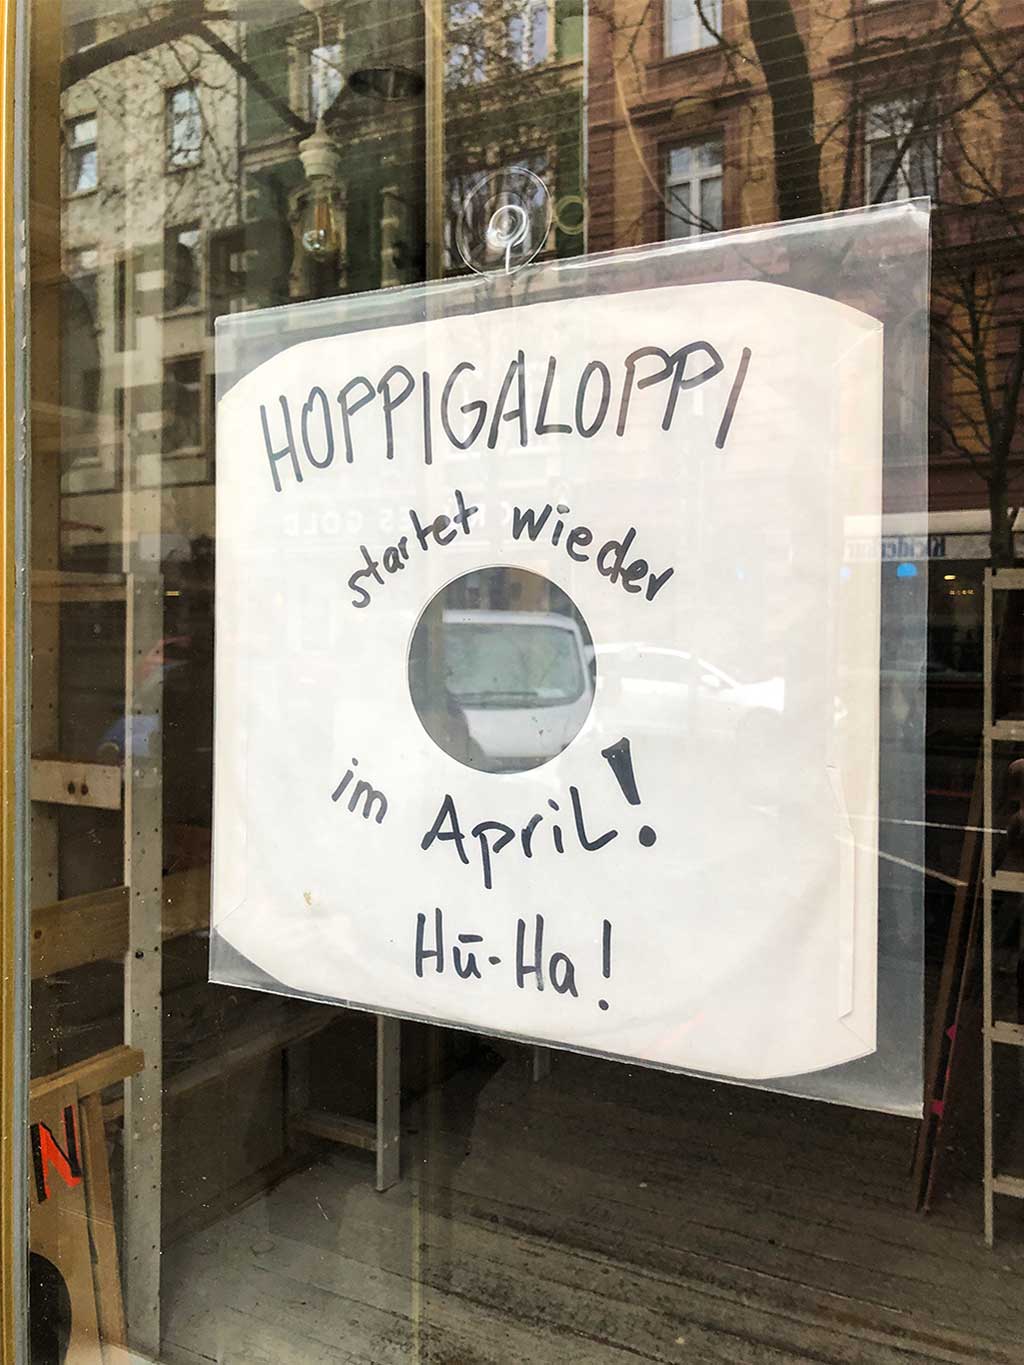 Hoppigaloppi in der Berger Straße startet wieder im April